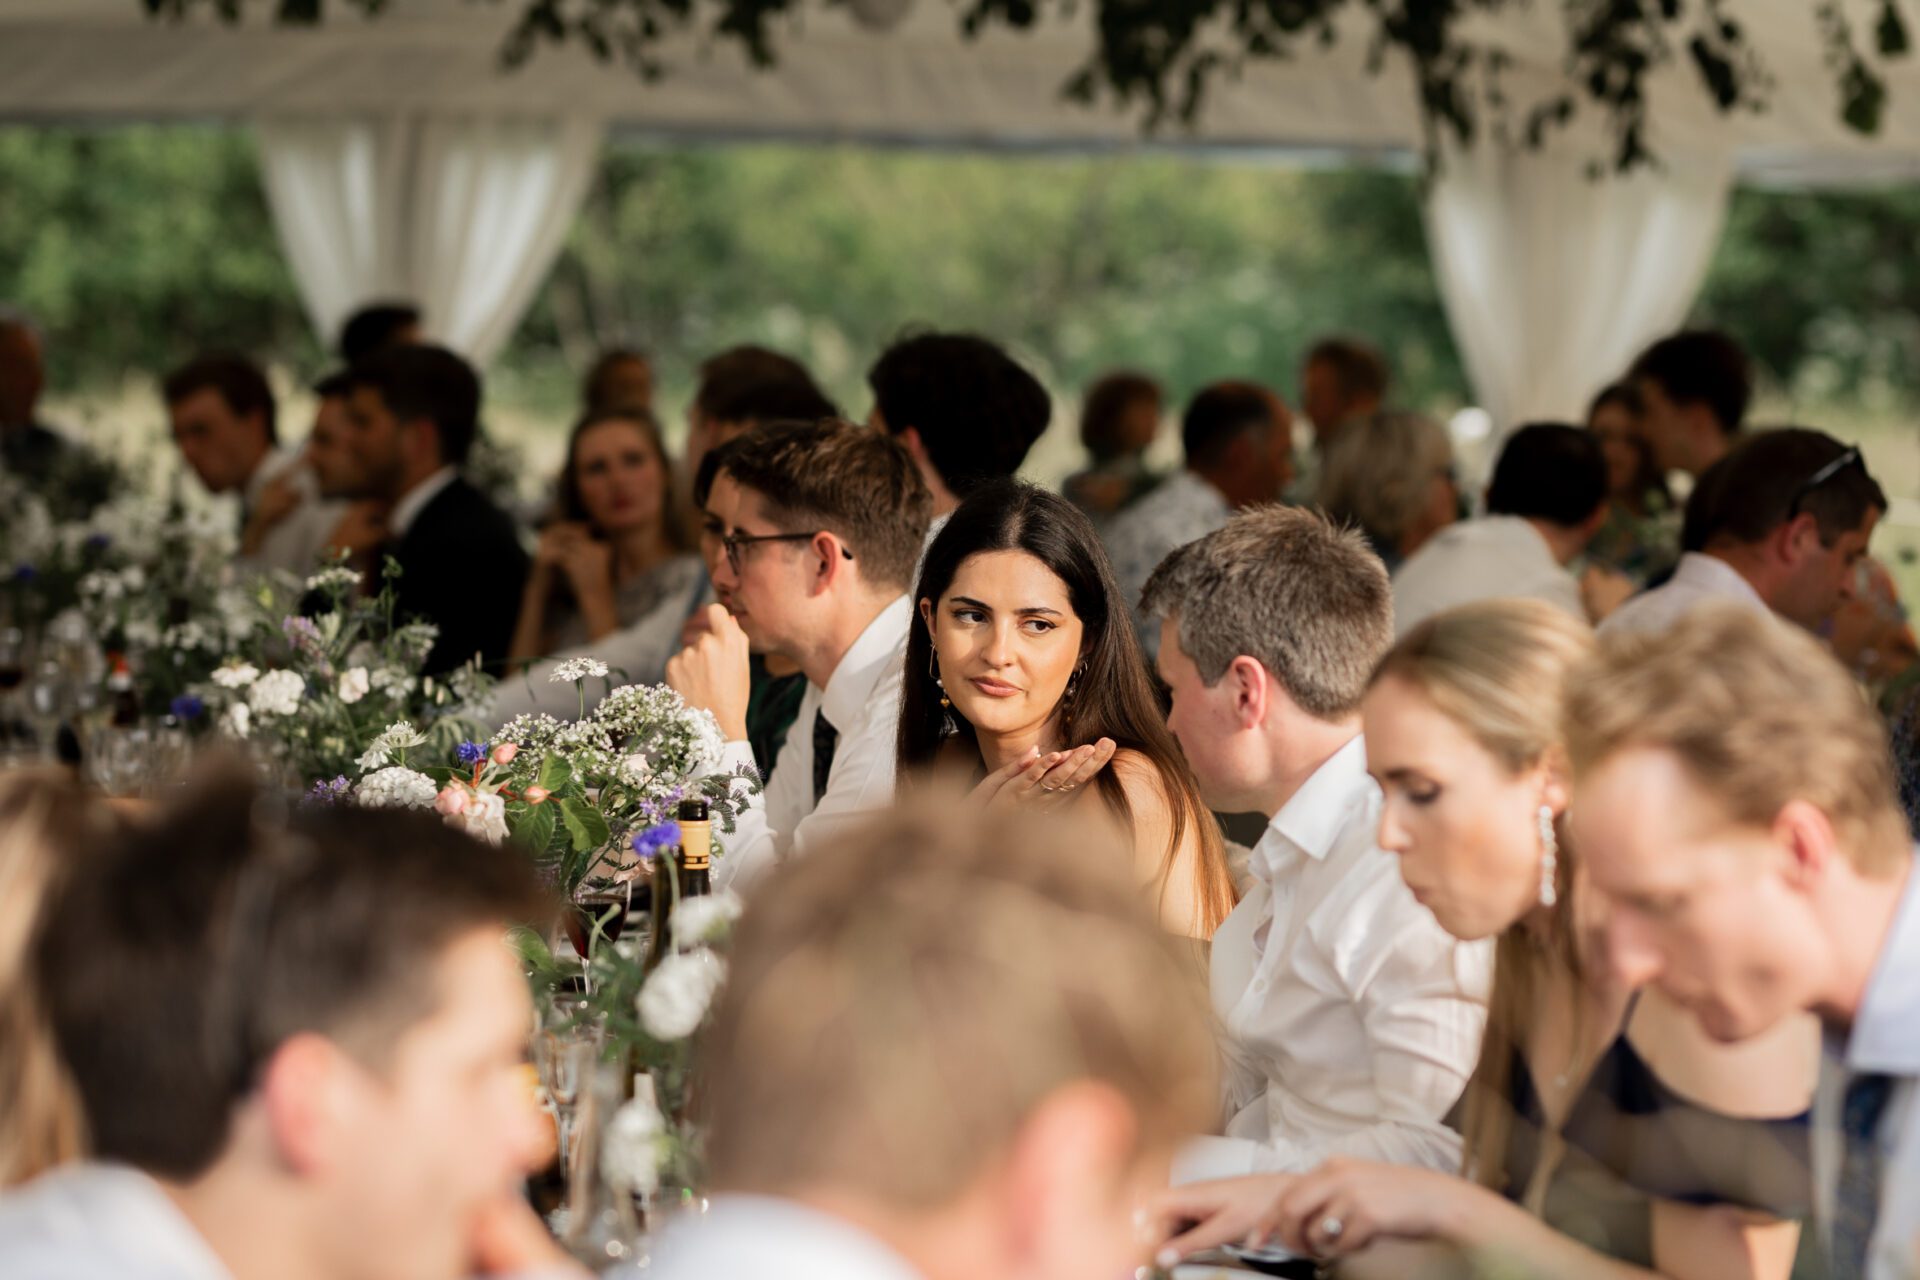 Wedding guests converse during the wedding breakfast at a Devon marquee wedding